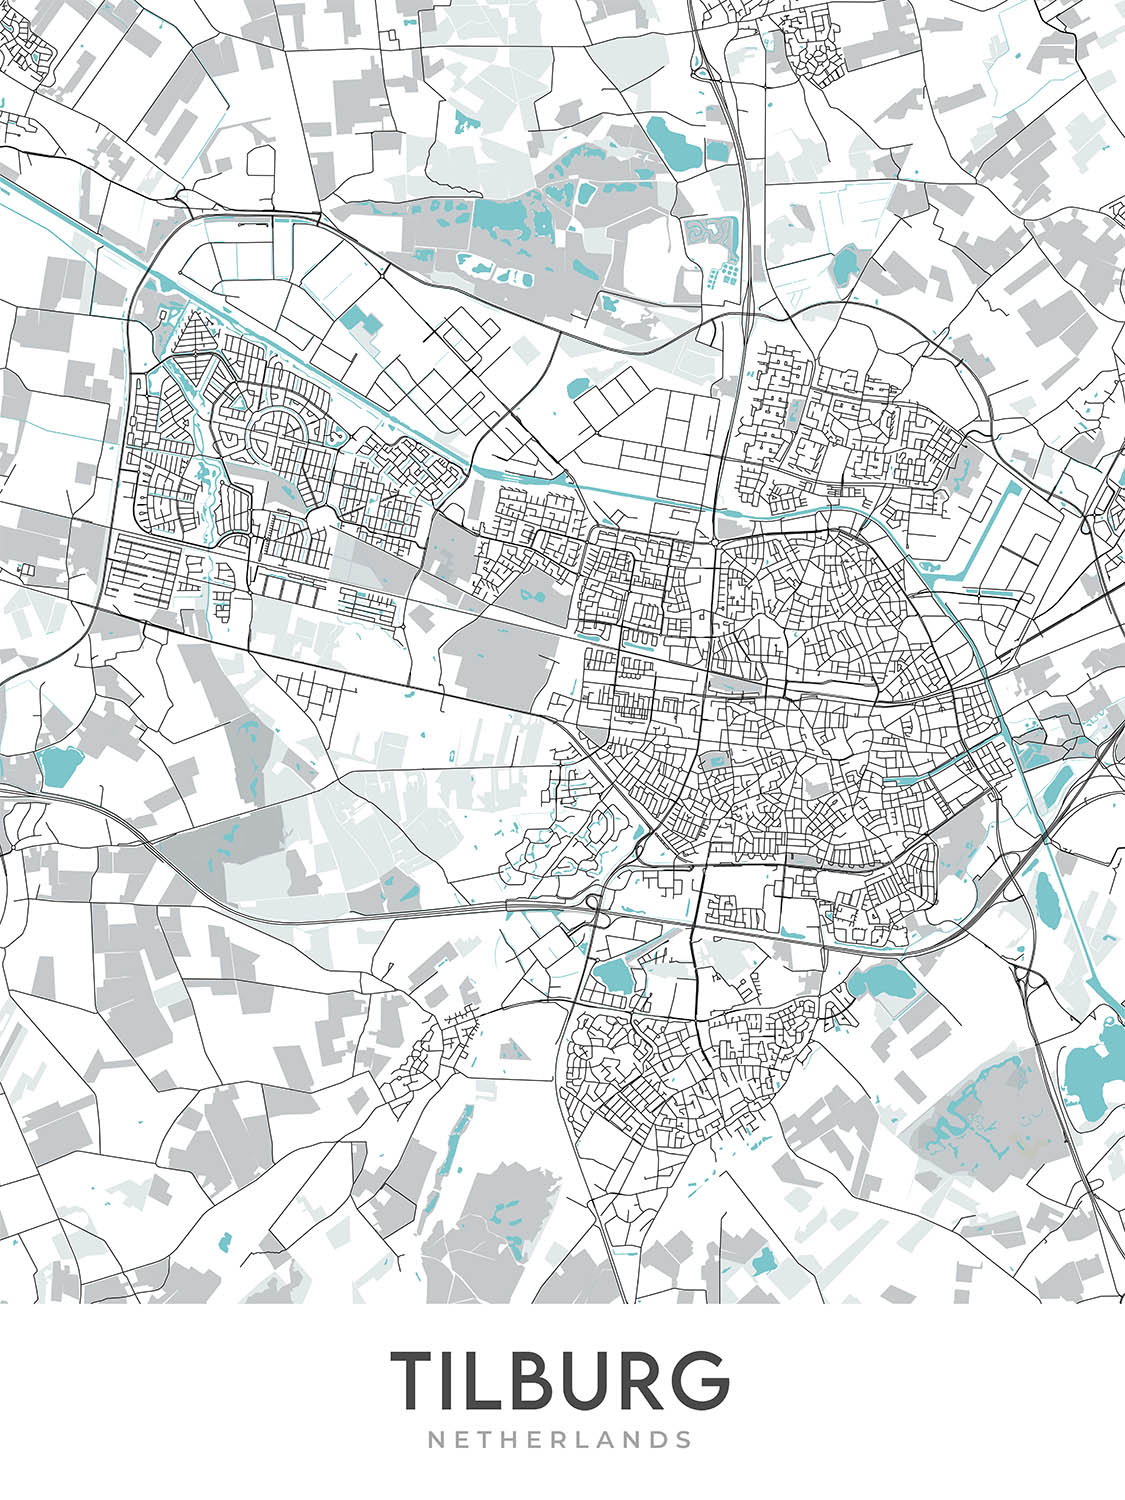 Moderner Stadtplan von Tilburg, Niederlande: Universität Tilburg, De Pont Museum, Natuurmuseum Brabant, TextielMuseum, Paleis-Raadhuis